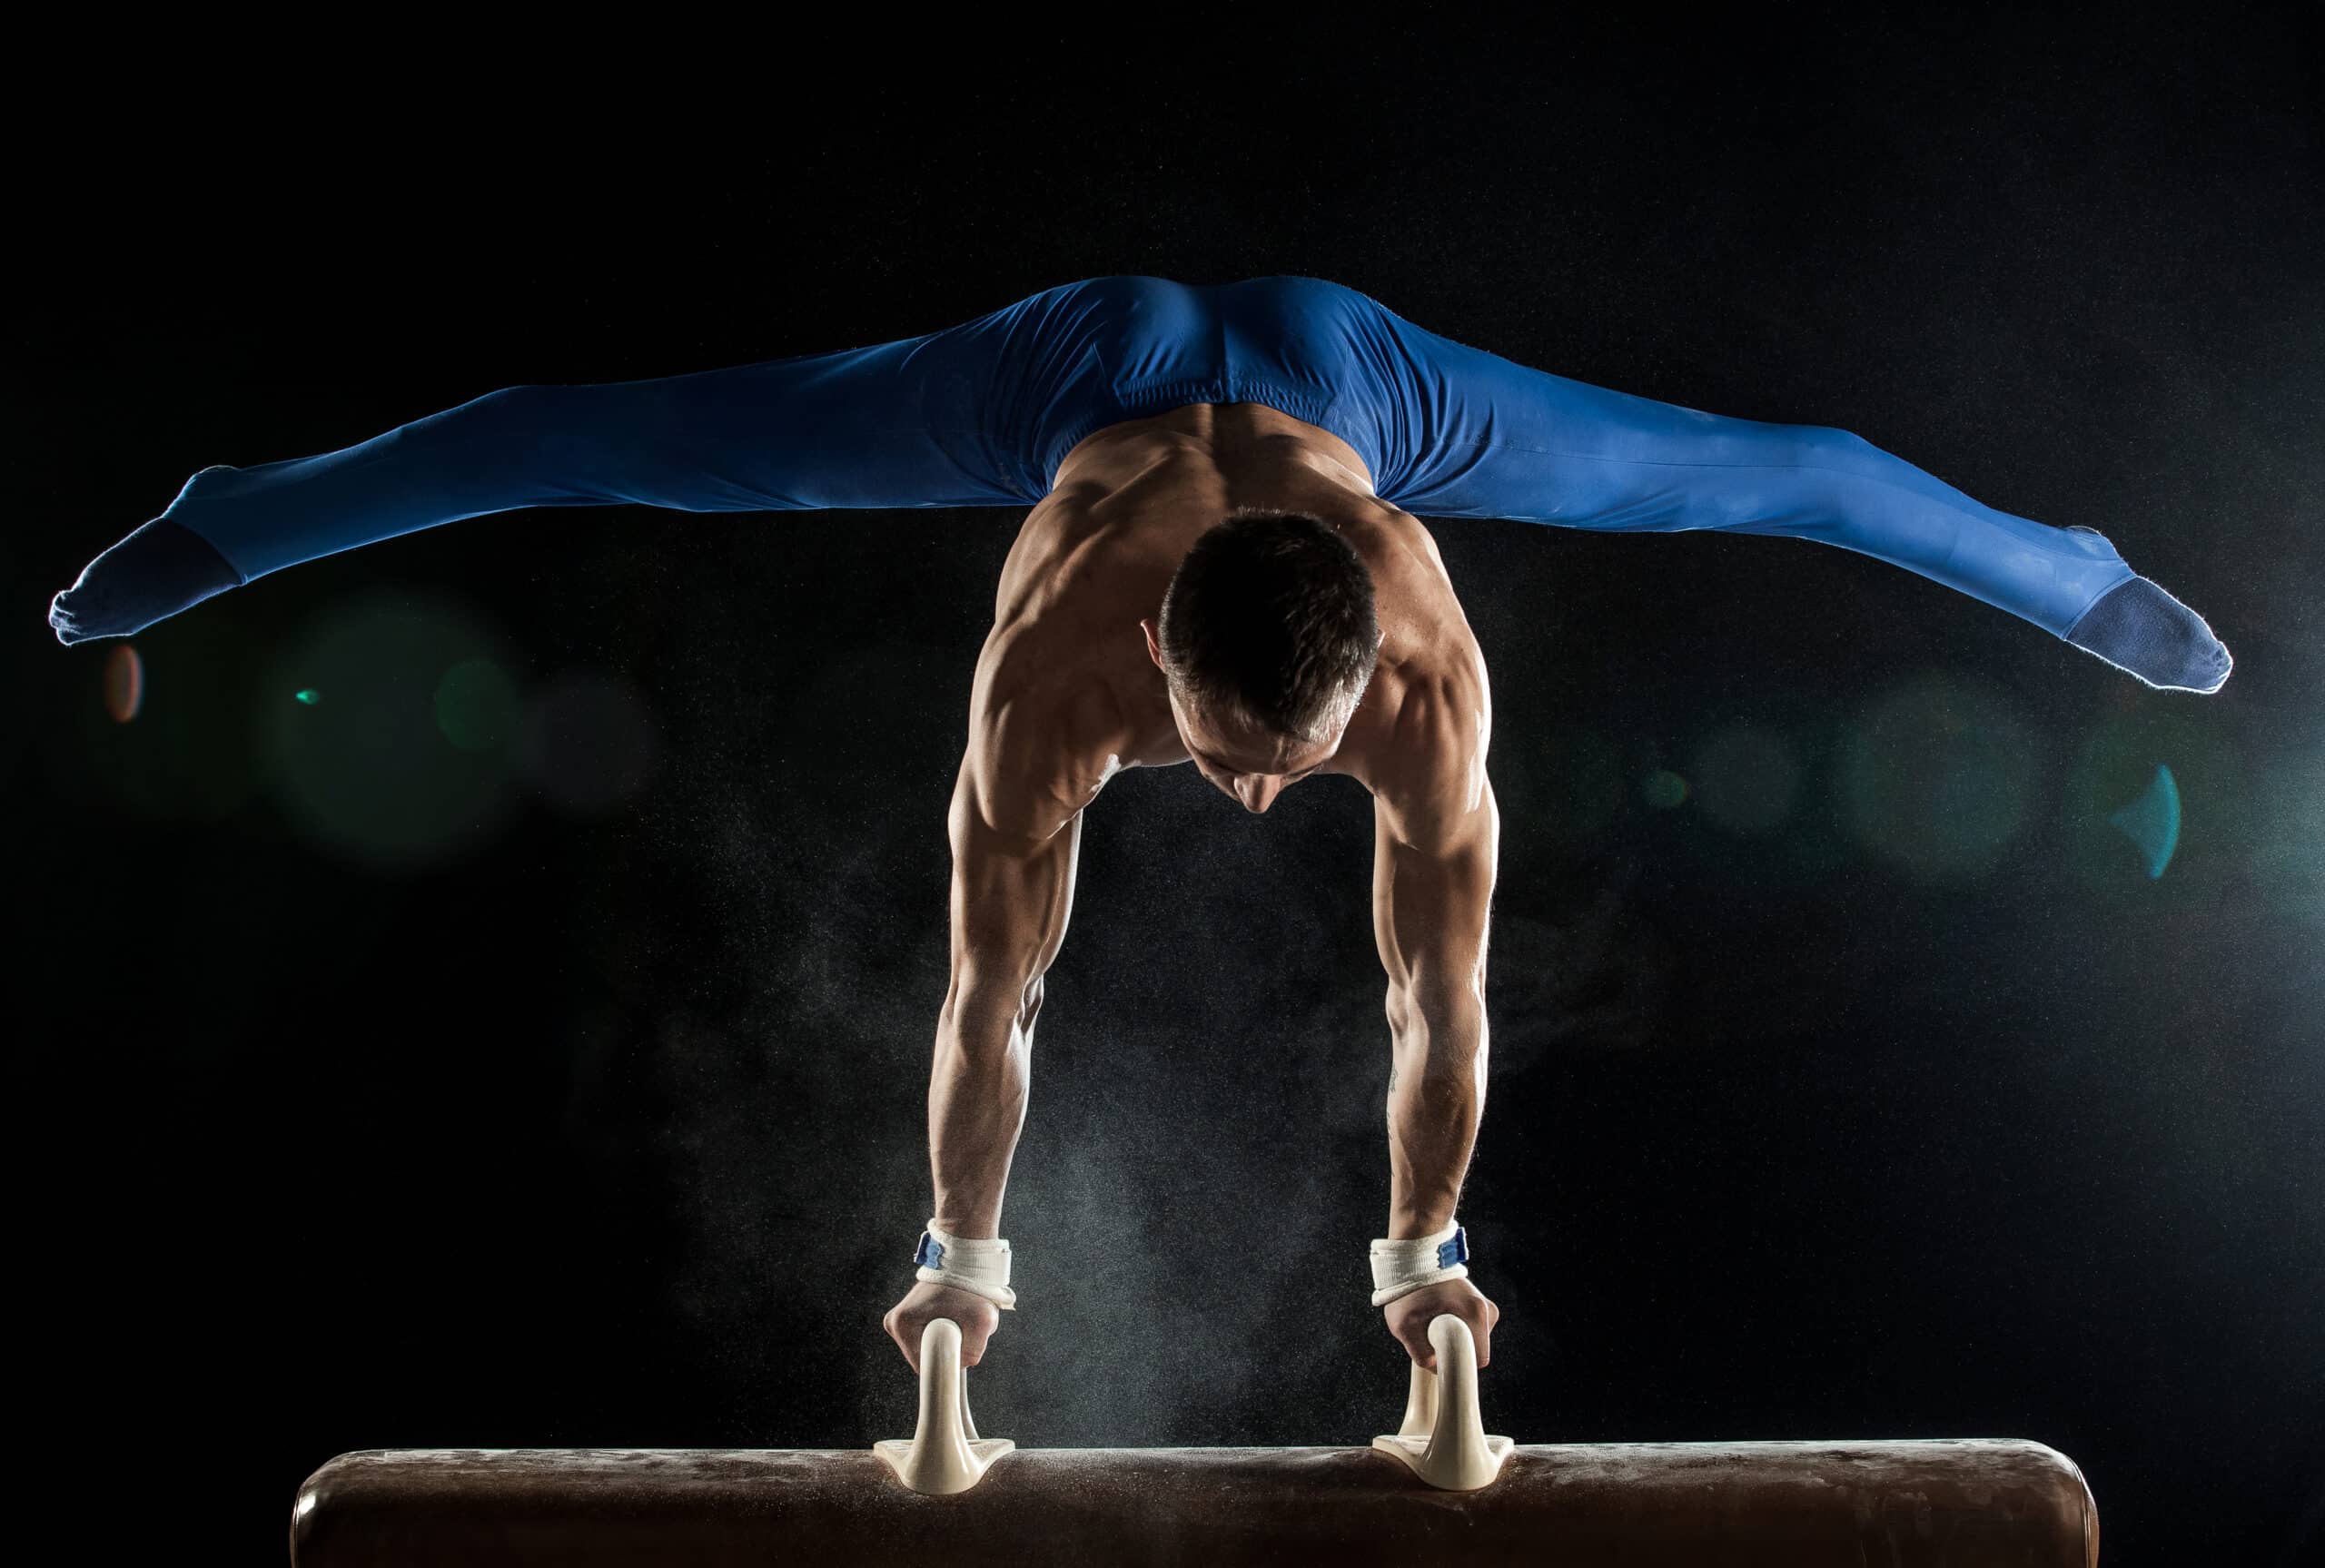 Male Gymnast doing handstand on Pommel Horse ©istock